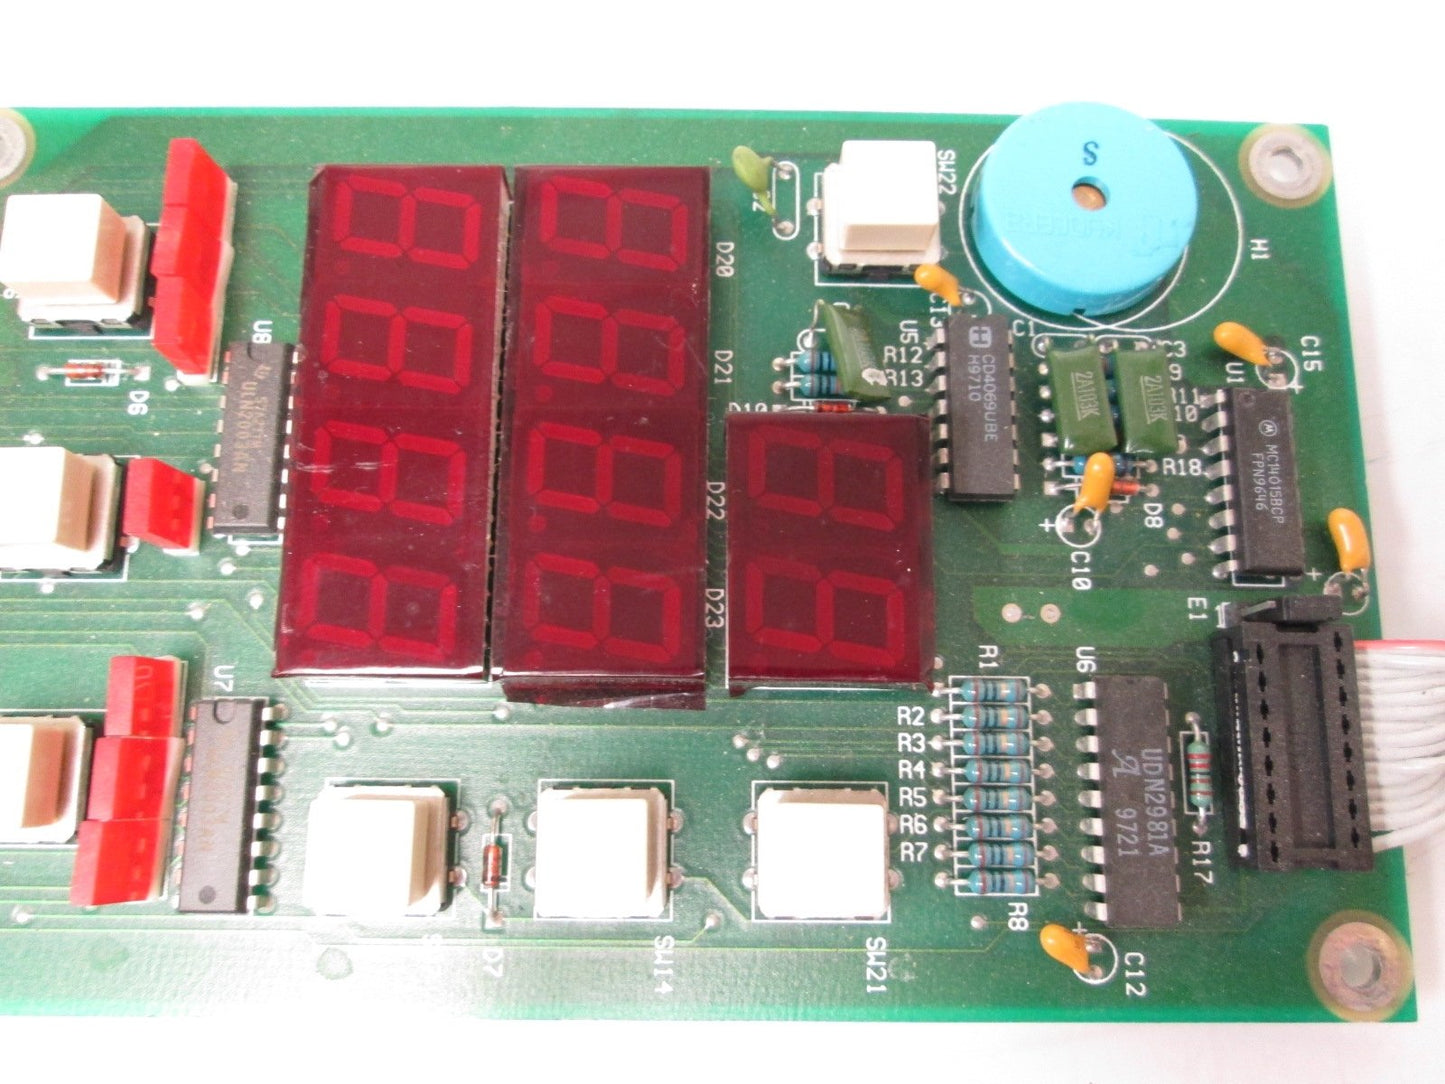 Used Olec 64AI478 Rev A Interface / Display Board FAB 17AI 478 Rev B